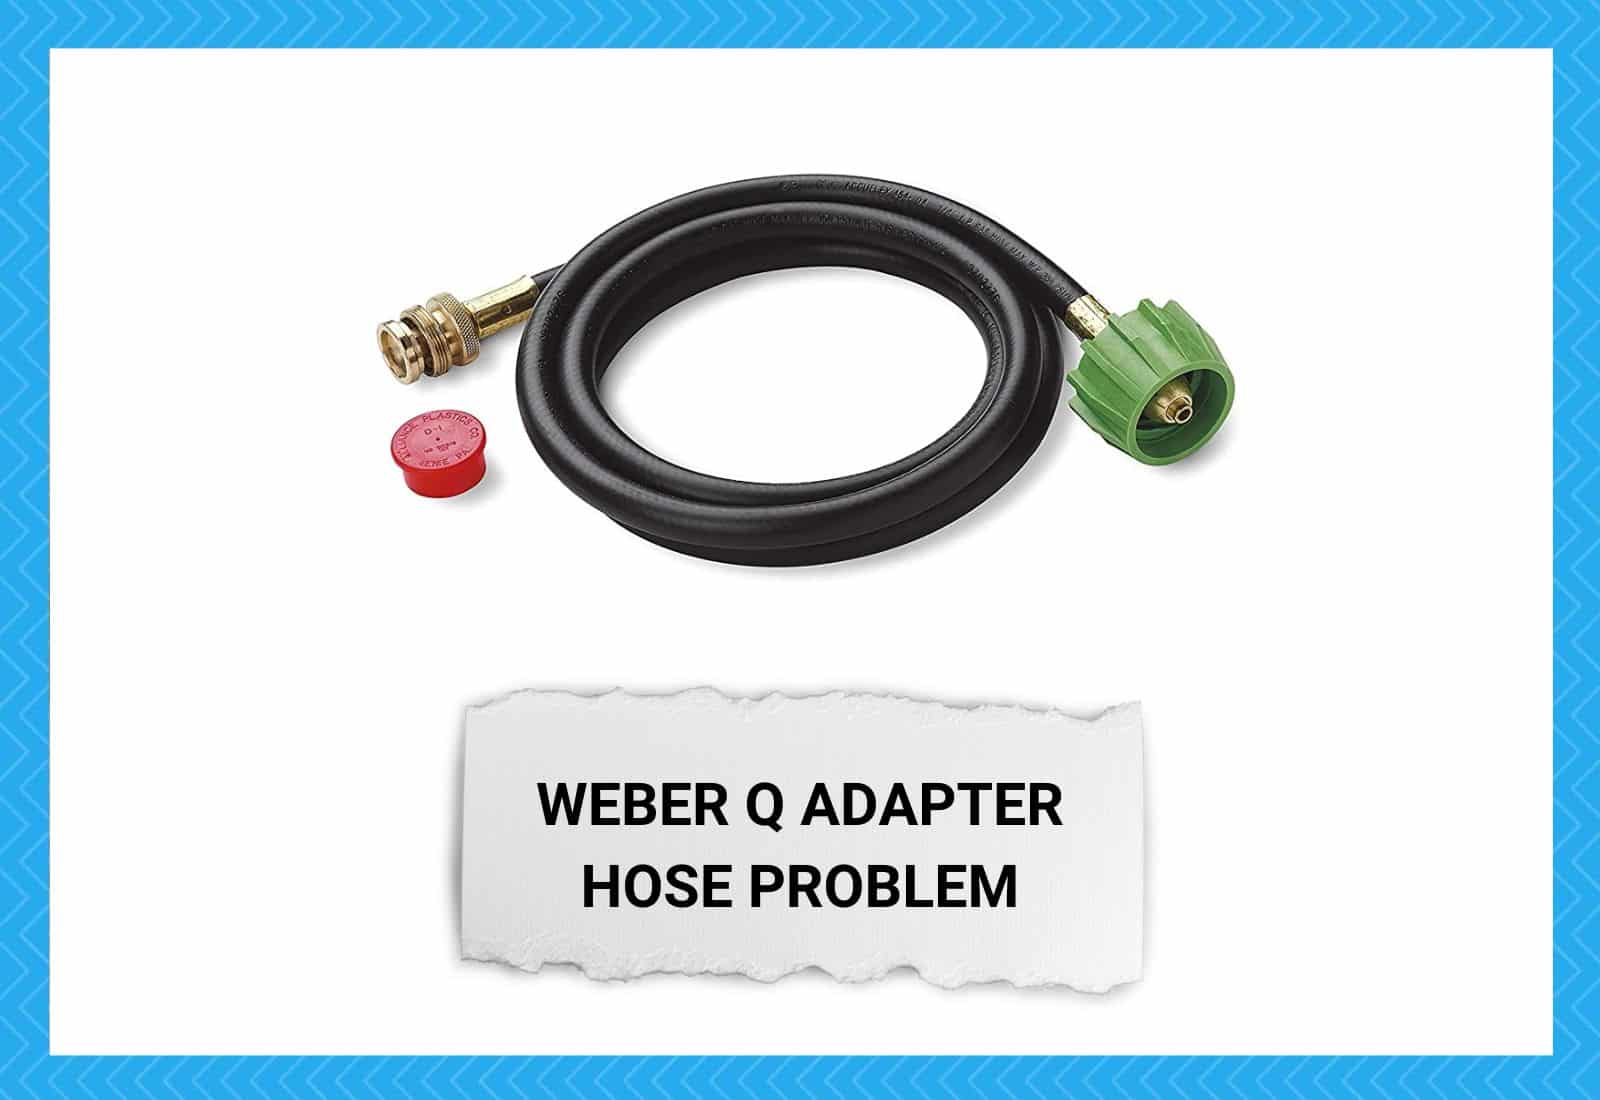 Weber Q Adapter Hose Problem